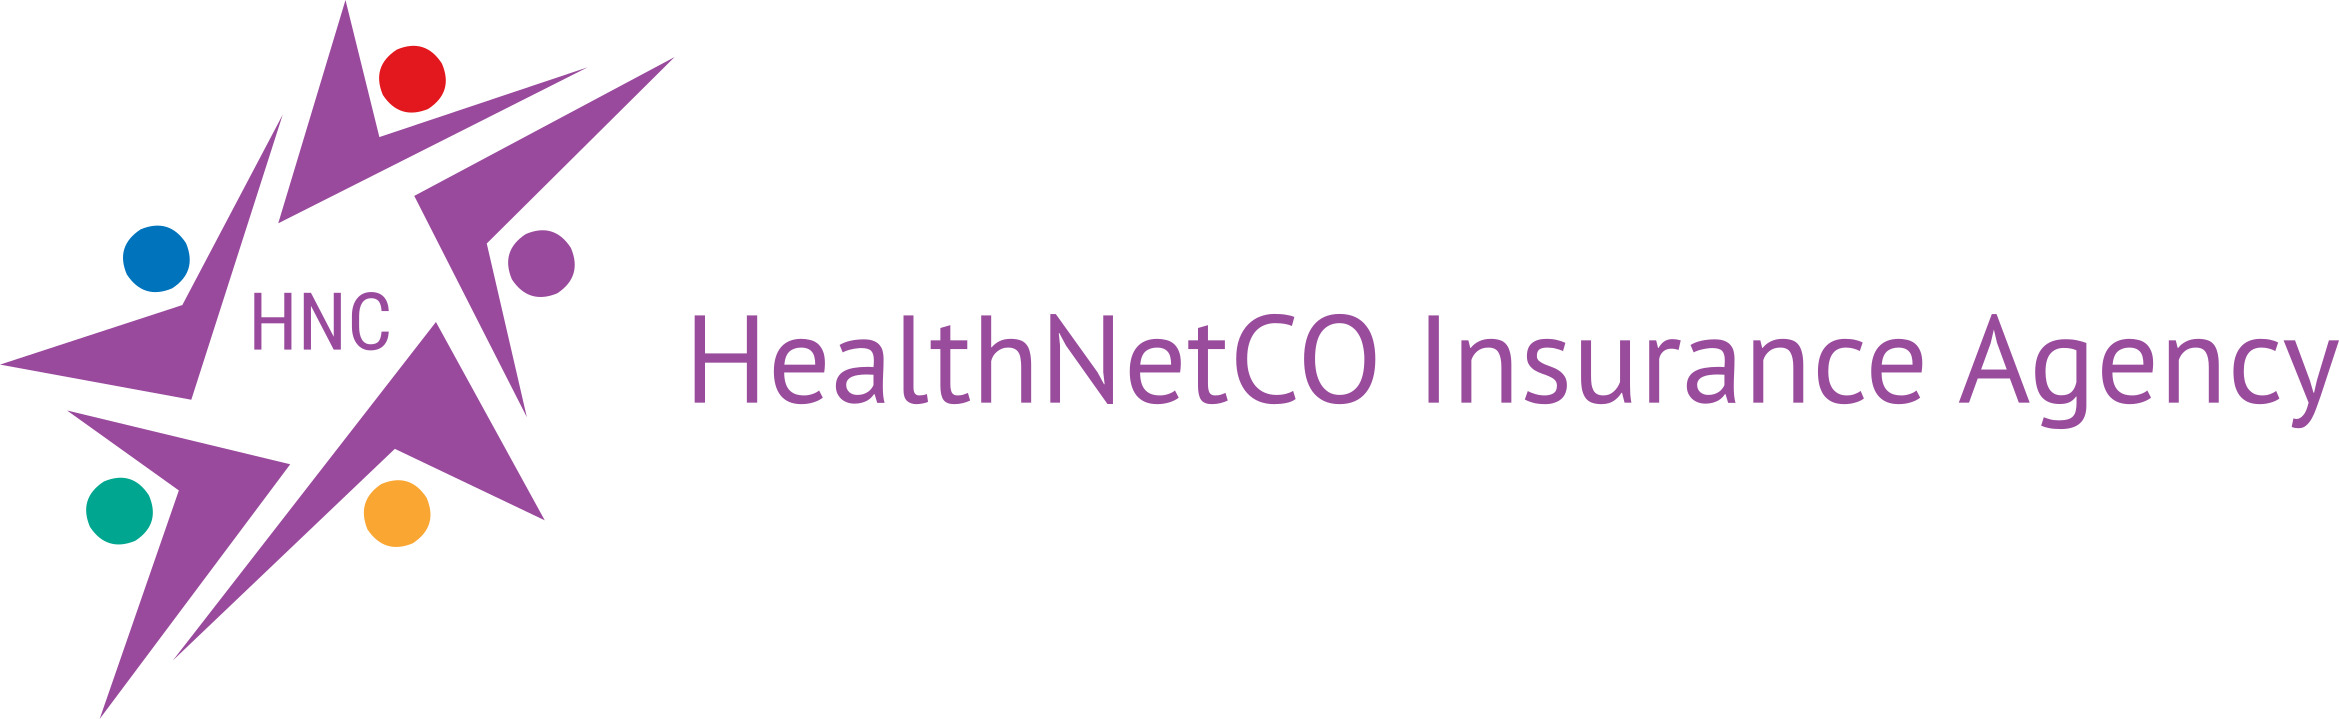 HealthNetCO Insurance Agency